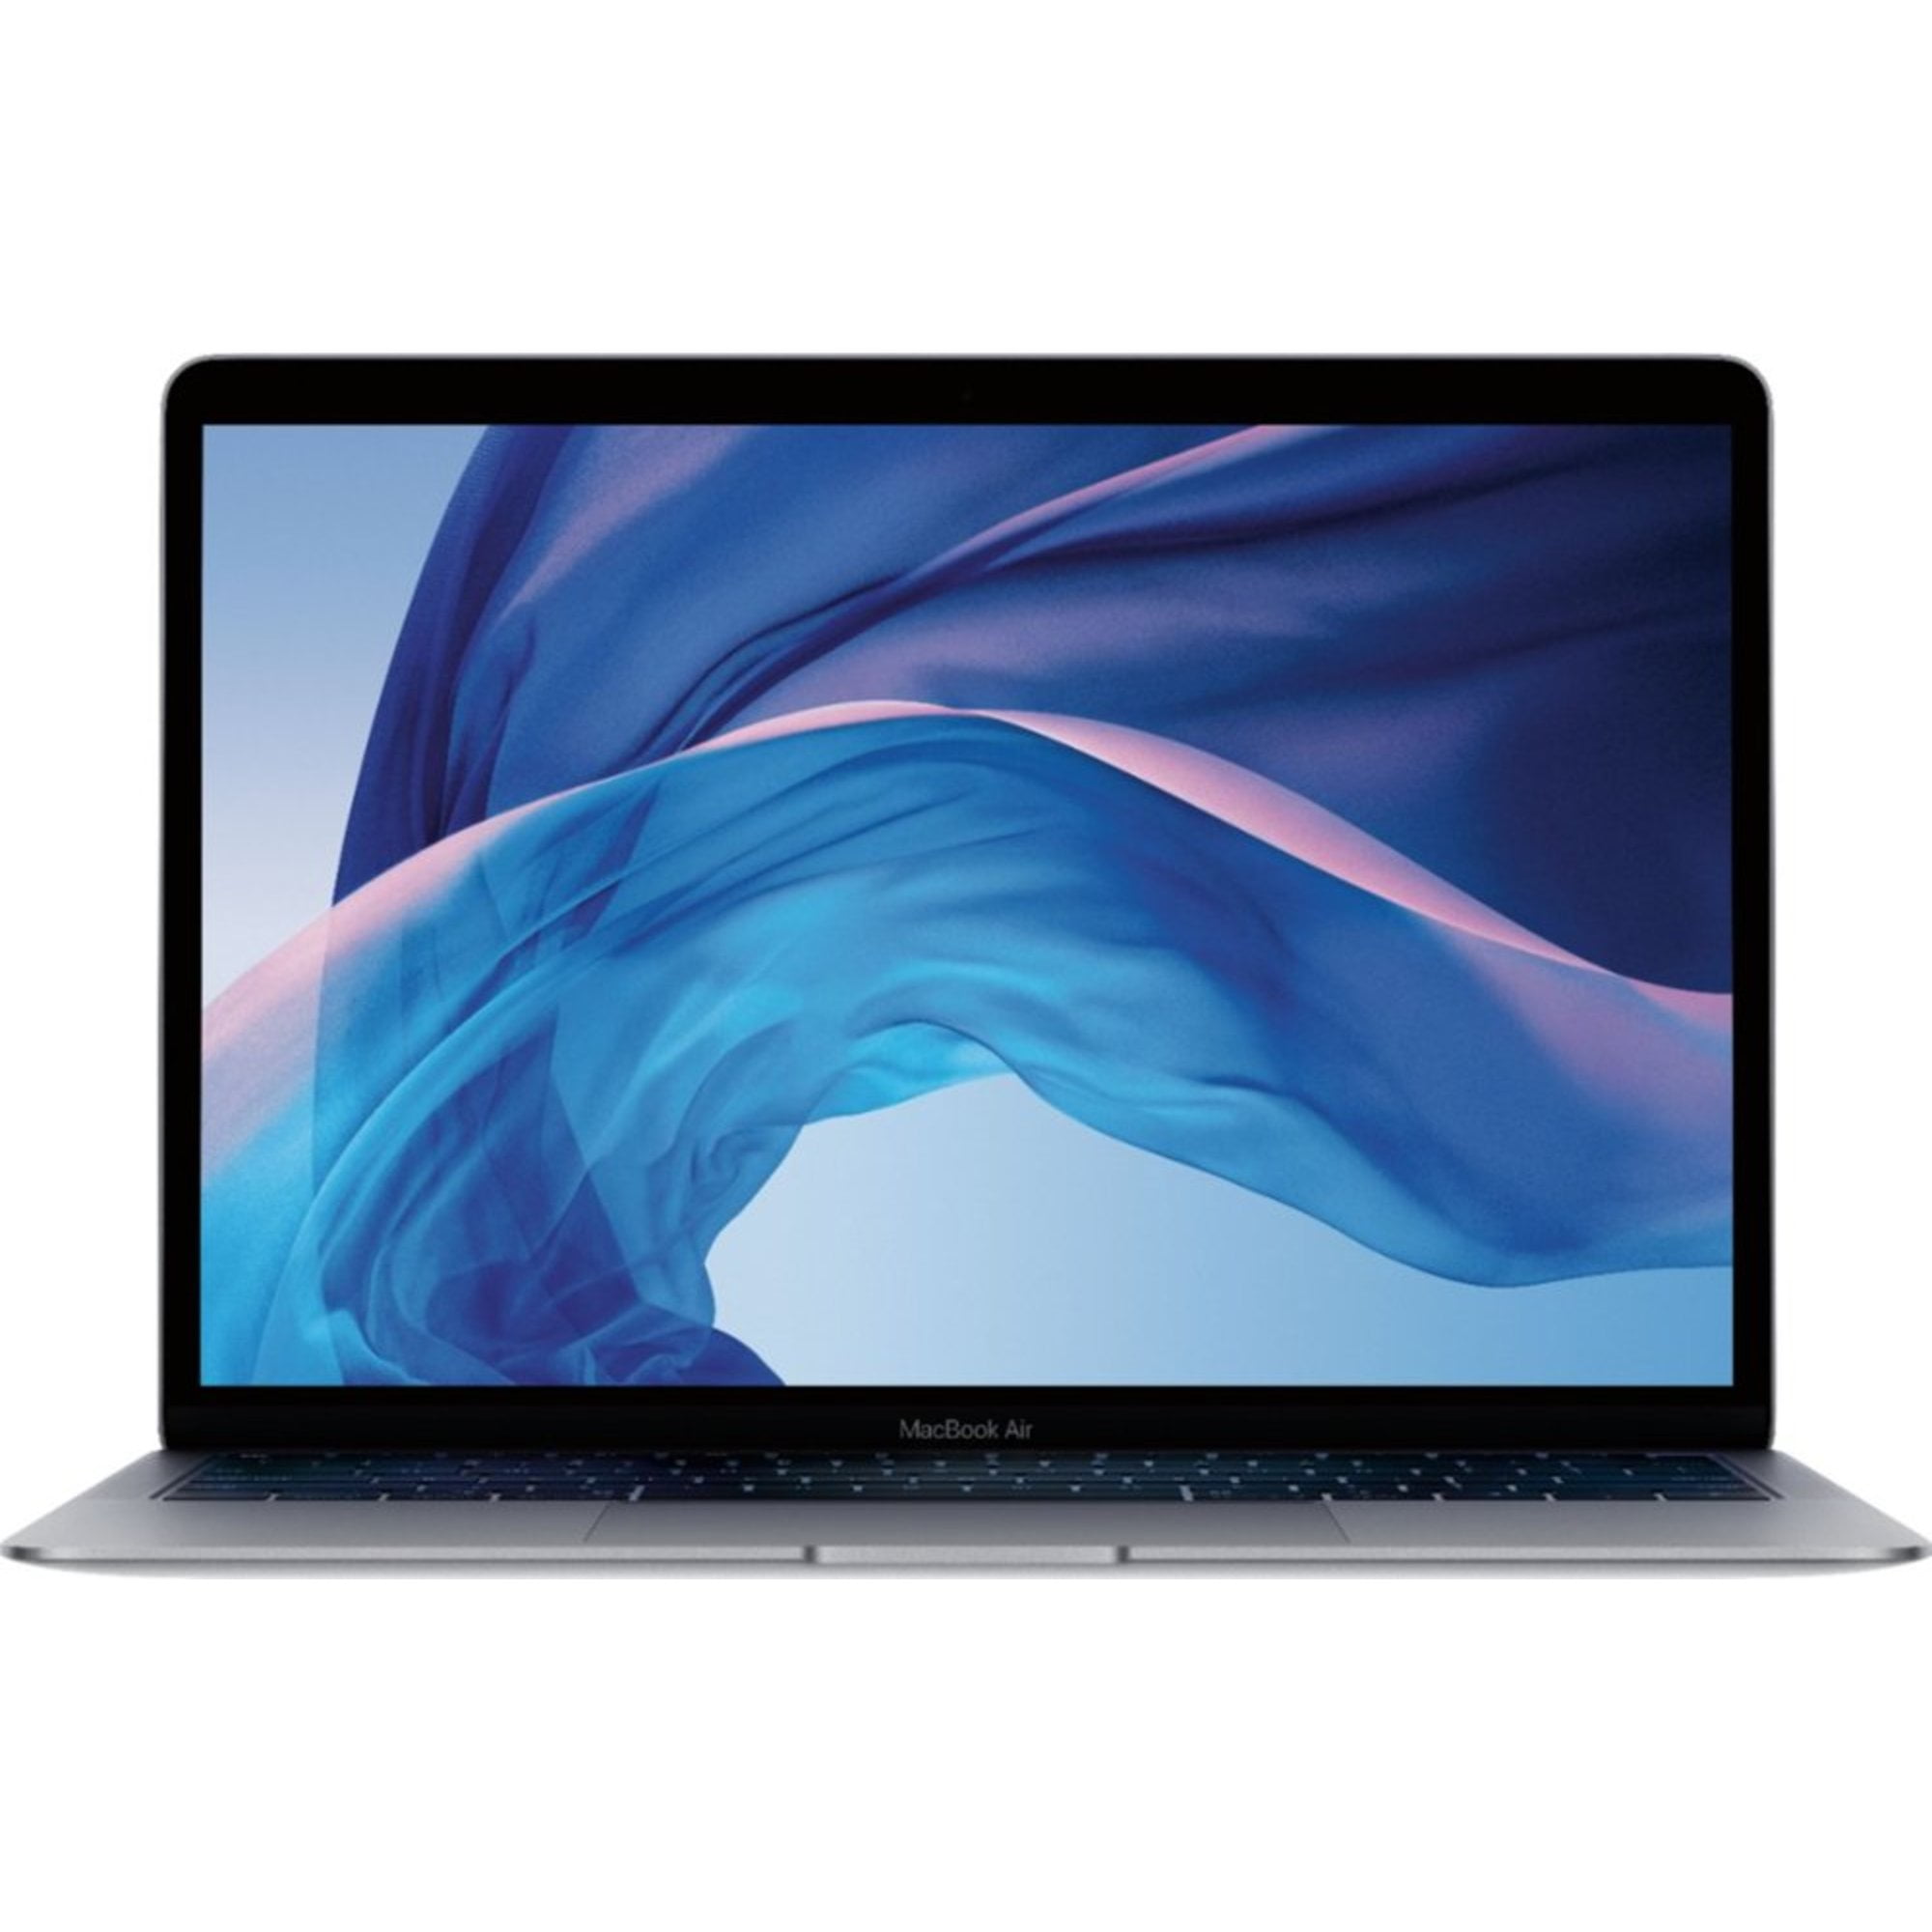 Restored Apple MacBook Air 13.3 2018 128GB MRE82LL/A - Space Gray  (Refurbished)